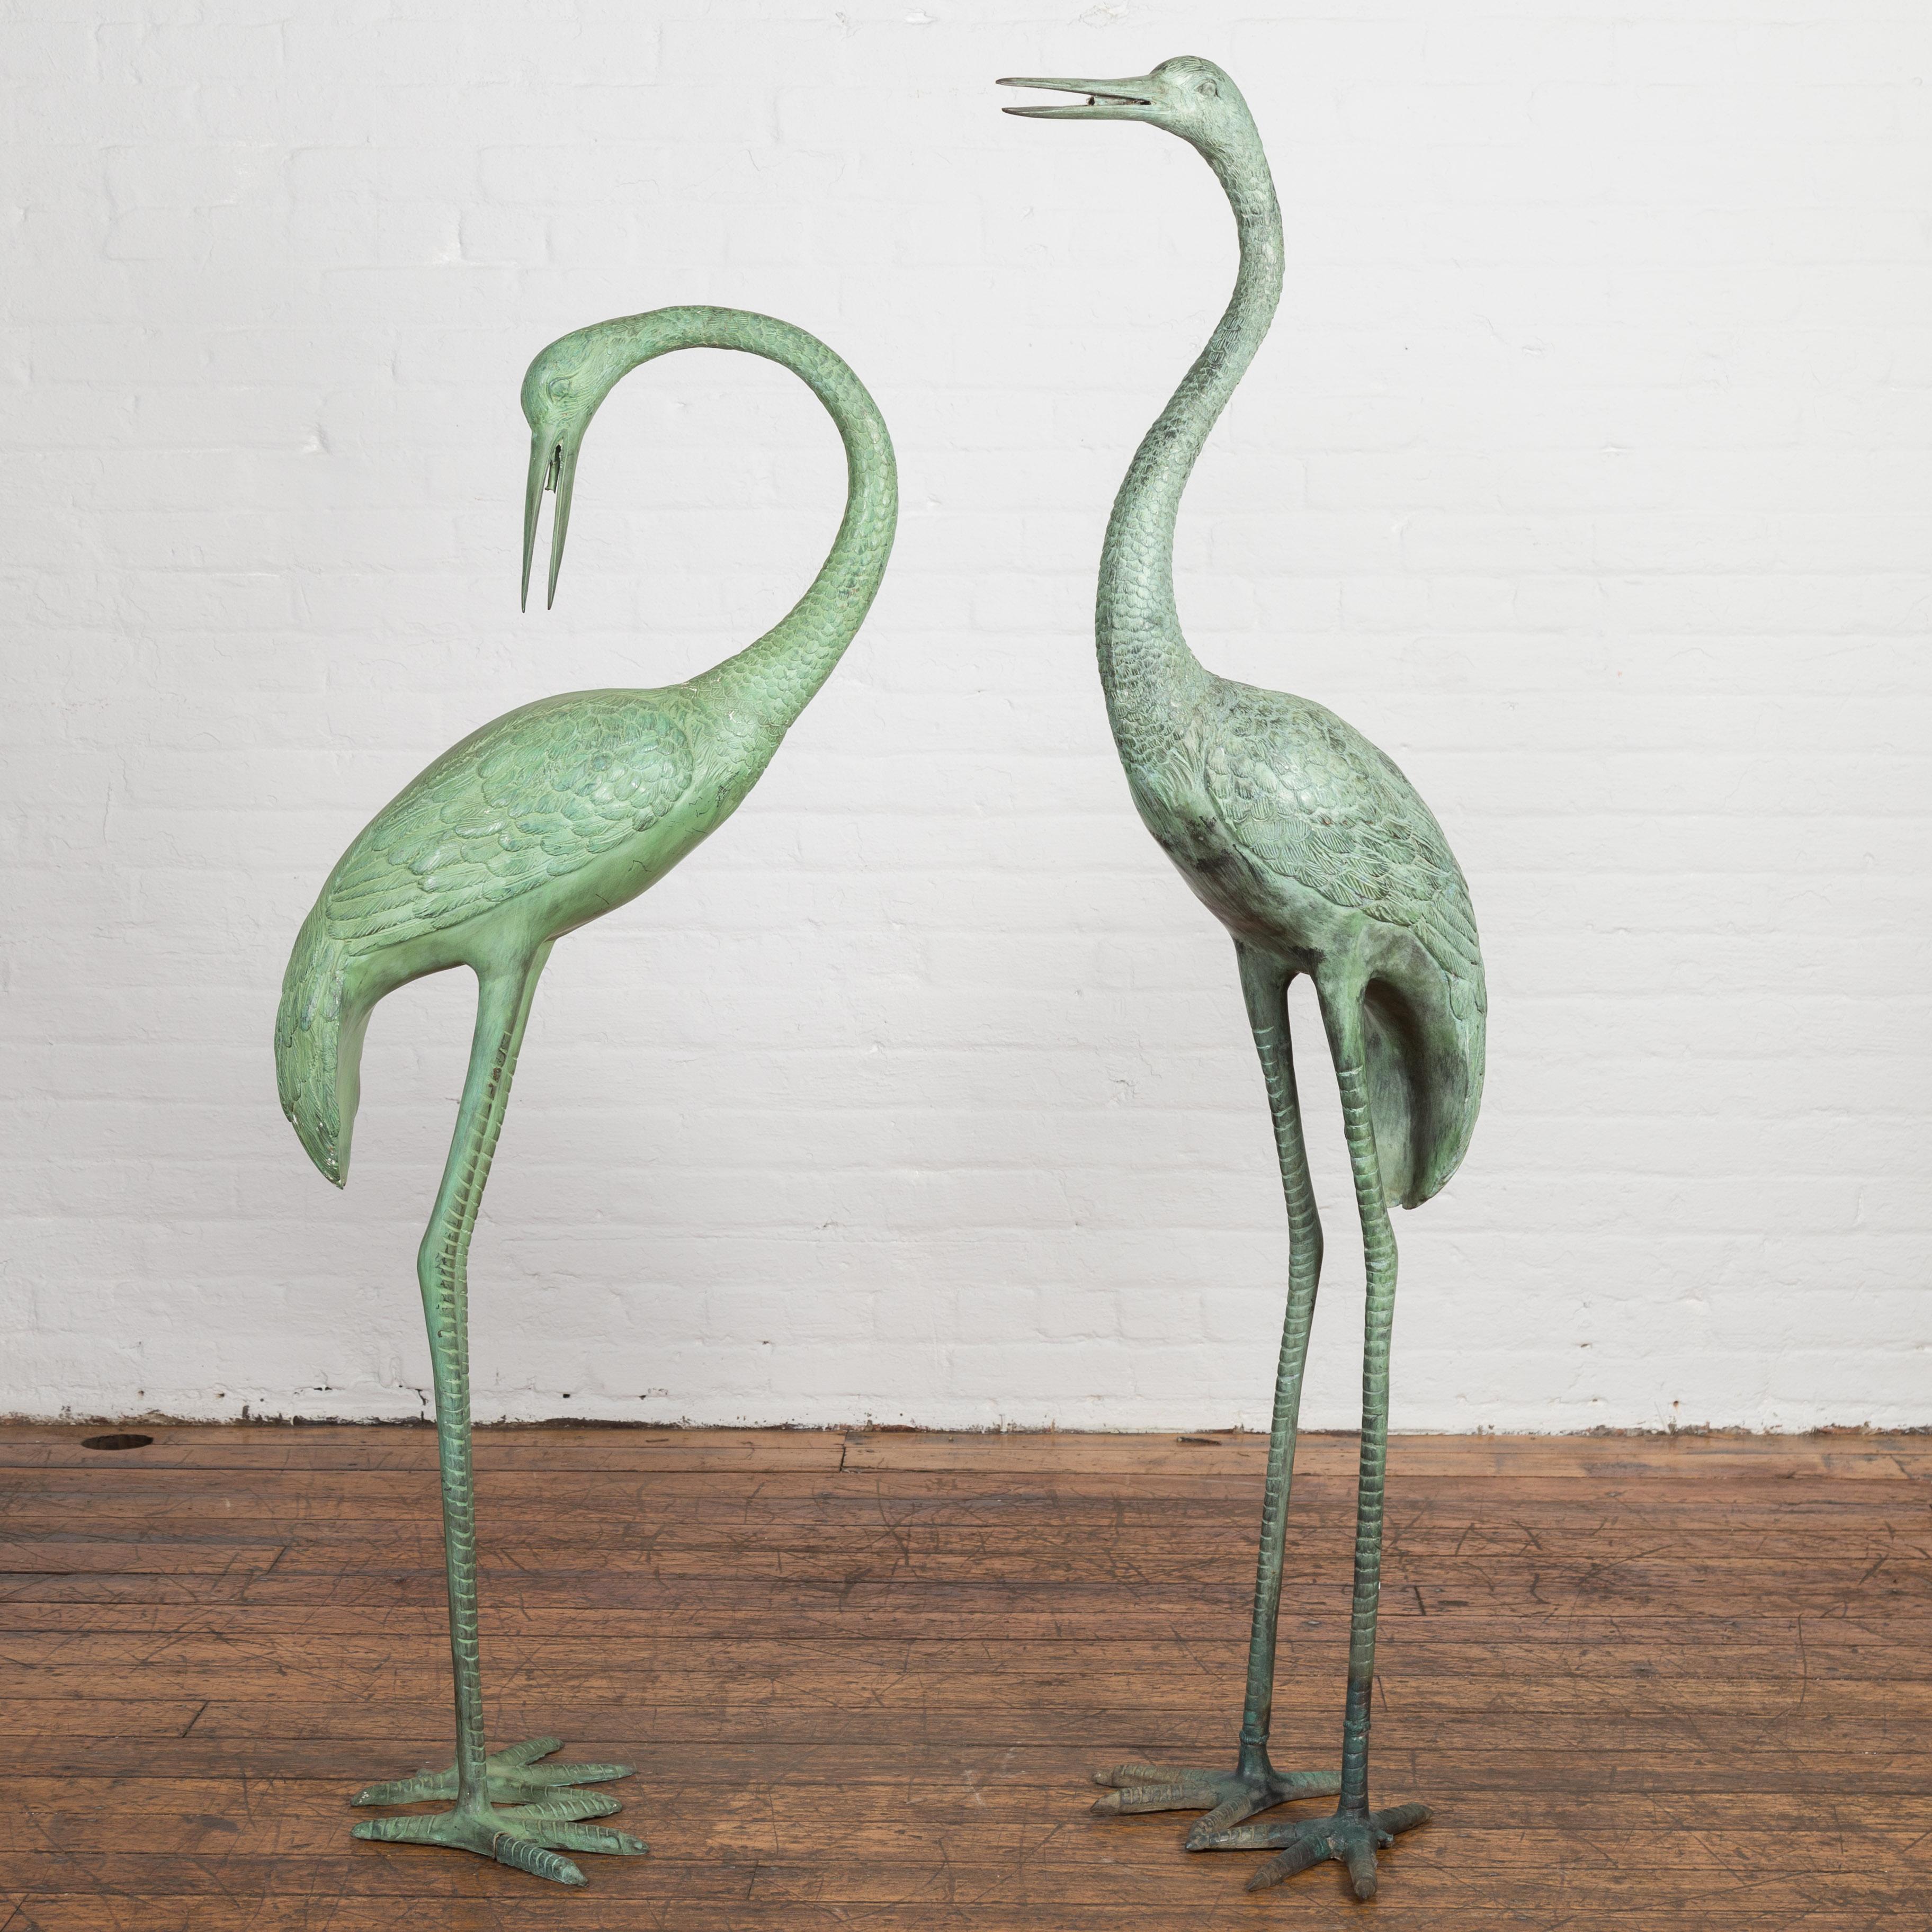 Pair of Lifesize Lost Wax Cast Bronze Crane Sculptures with Verdigris Patina For Sale 1